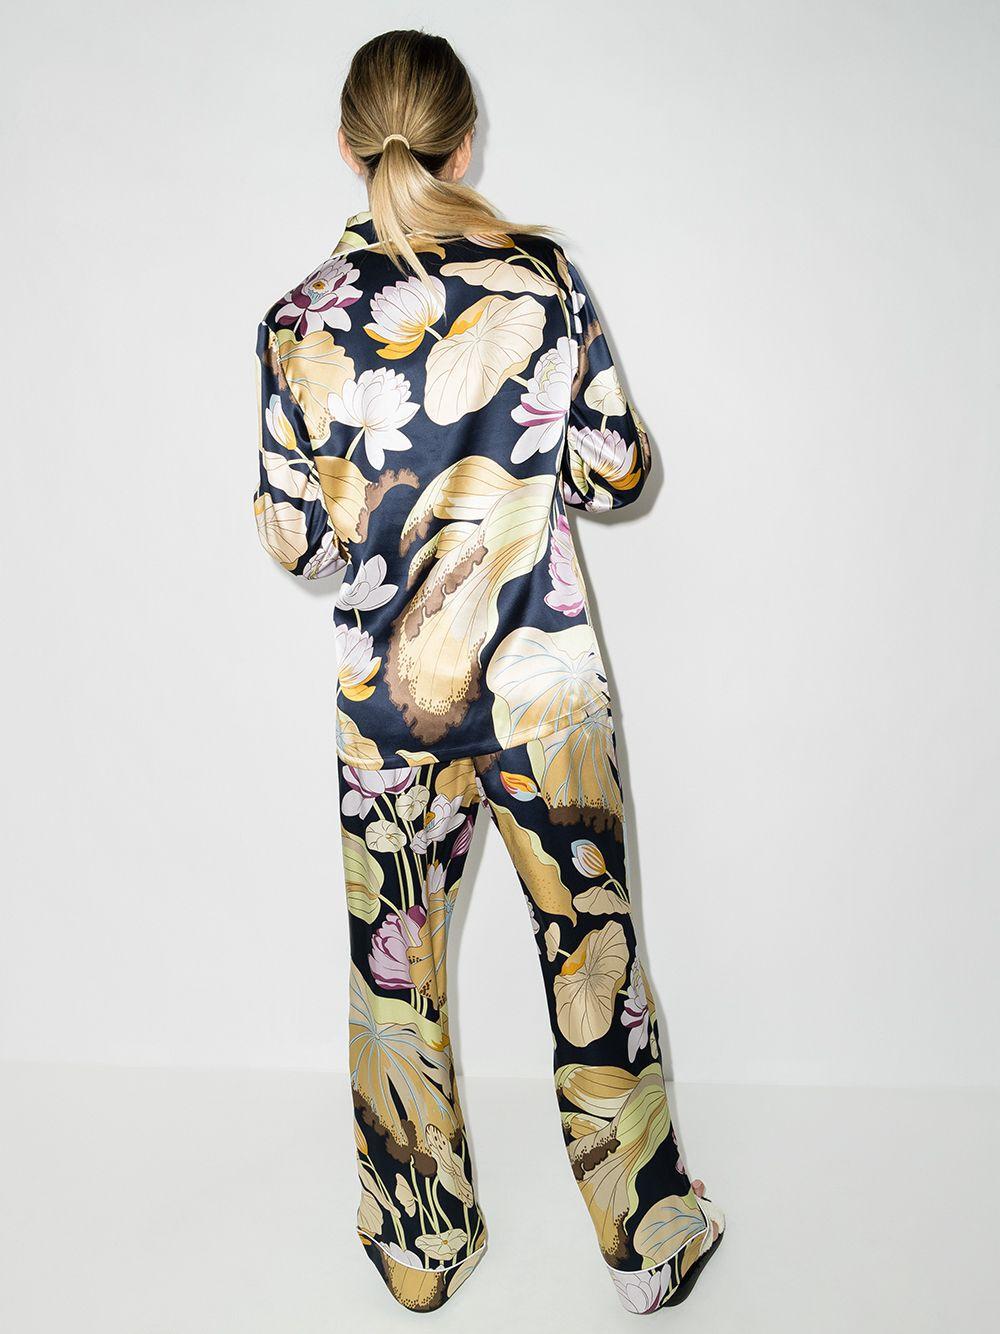 NEW Olivia Von Halle Silk Floral Print Lounge Home Sleep Wear Suit S For Sale 1